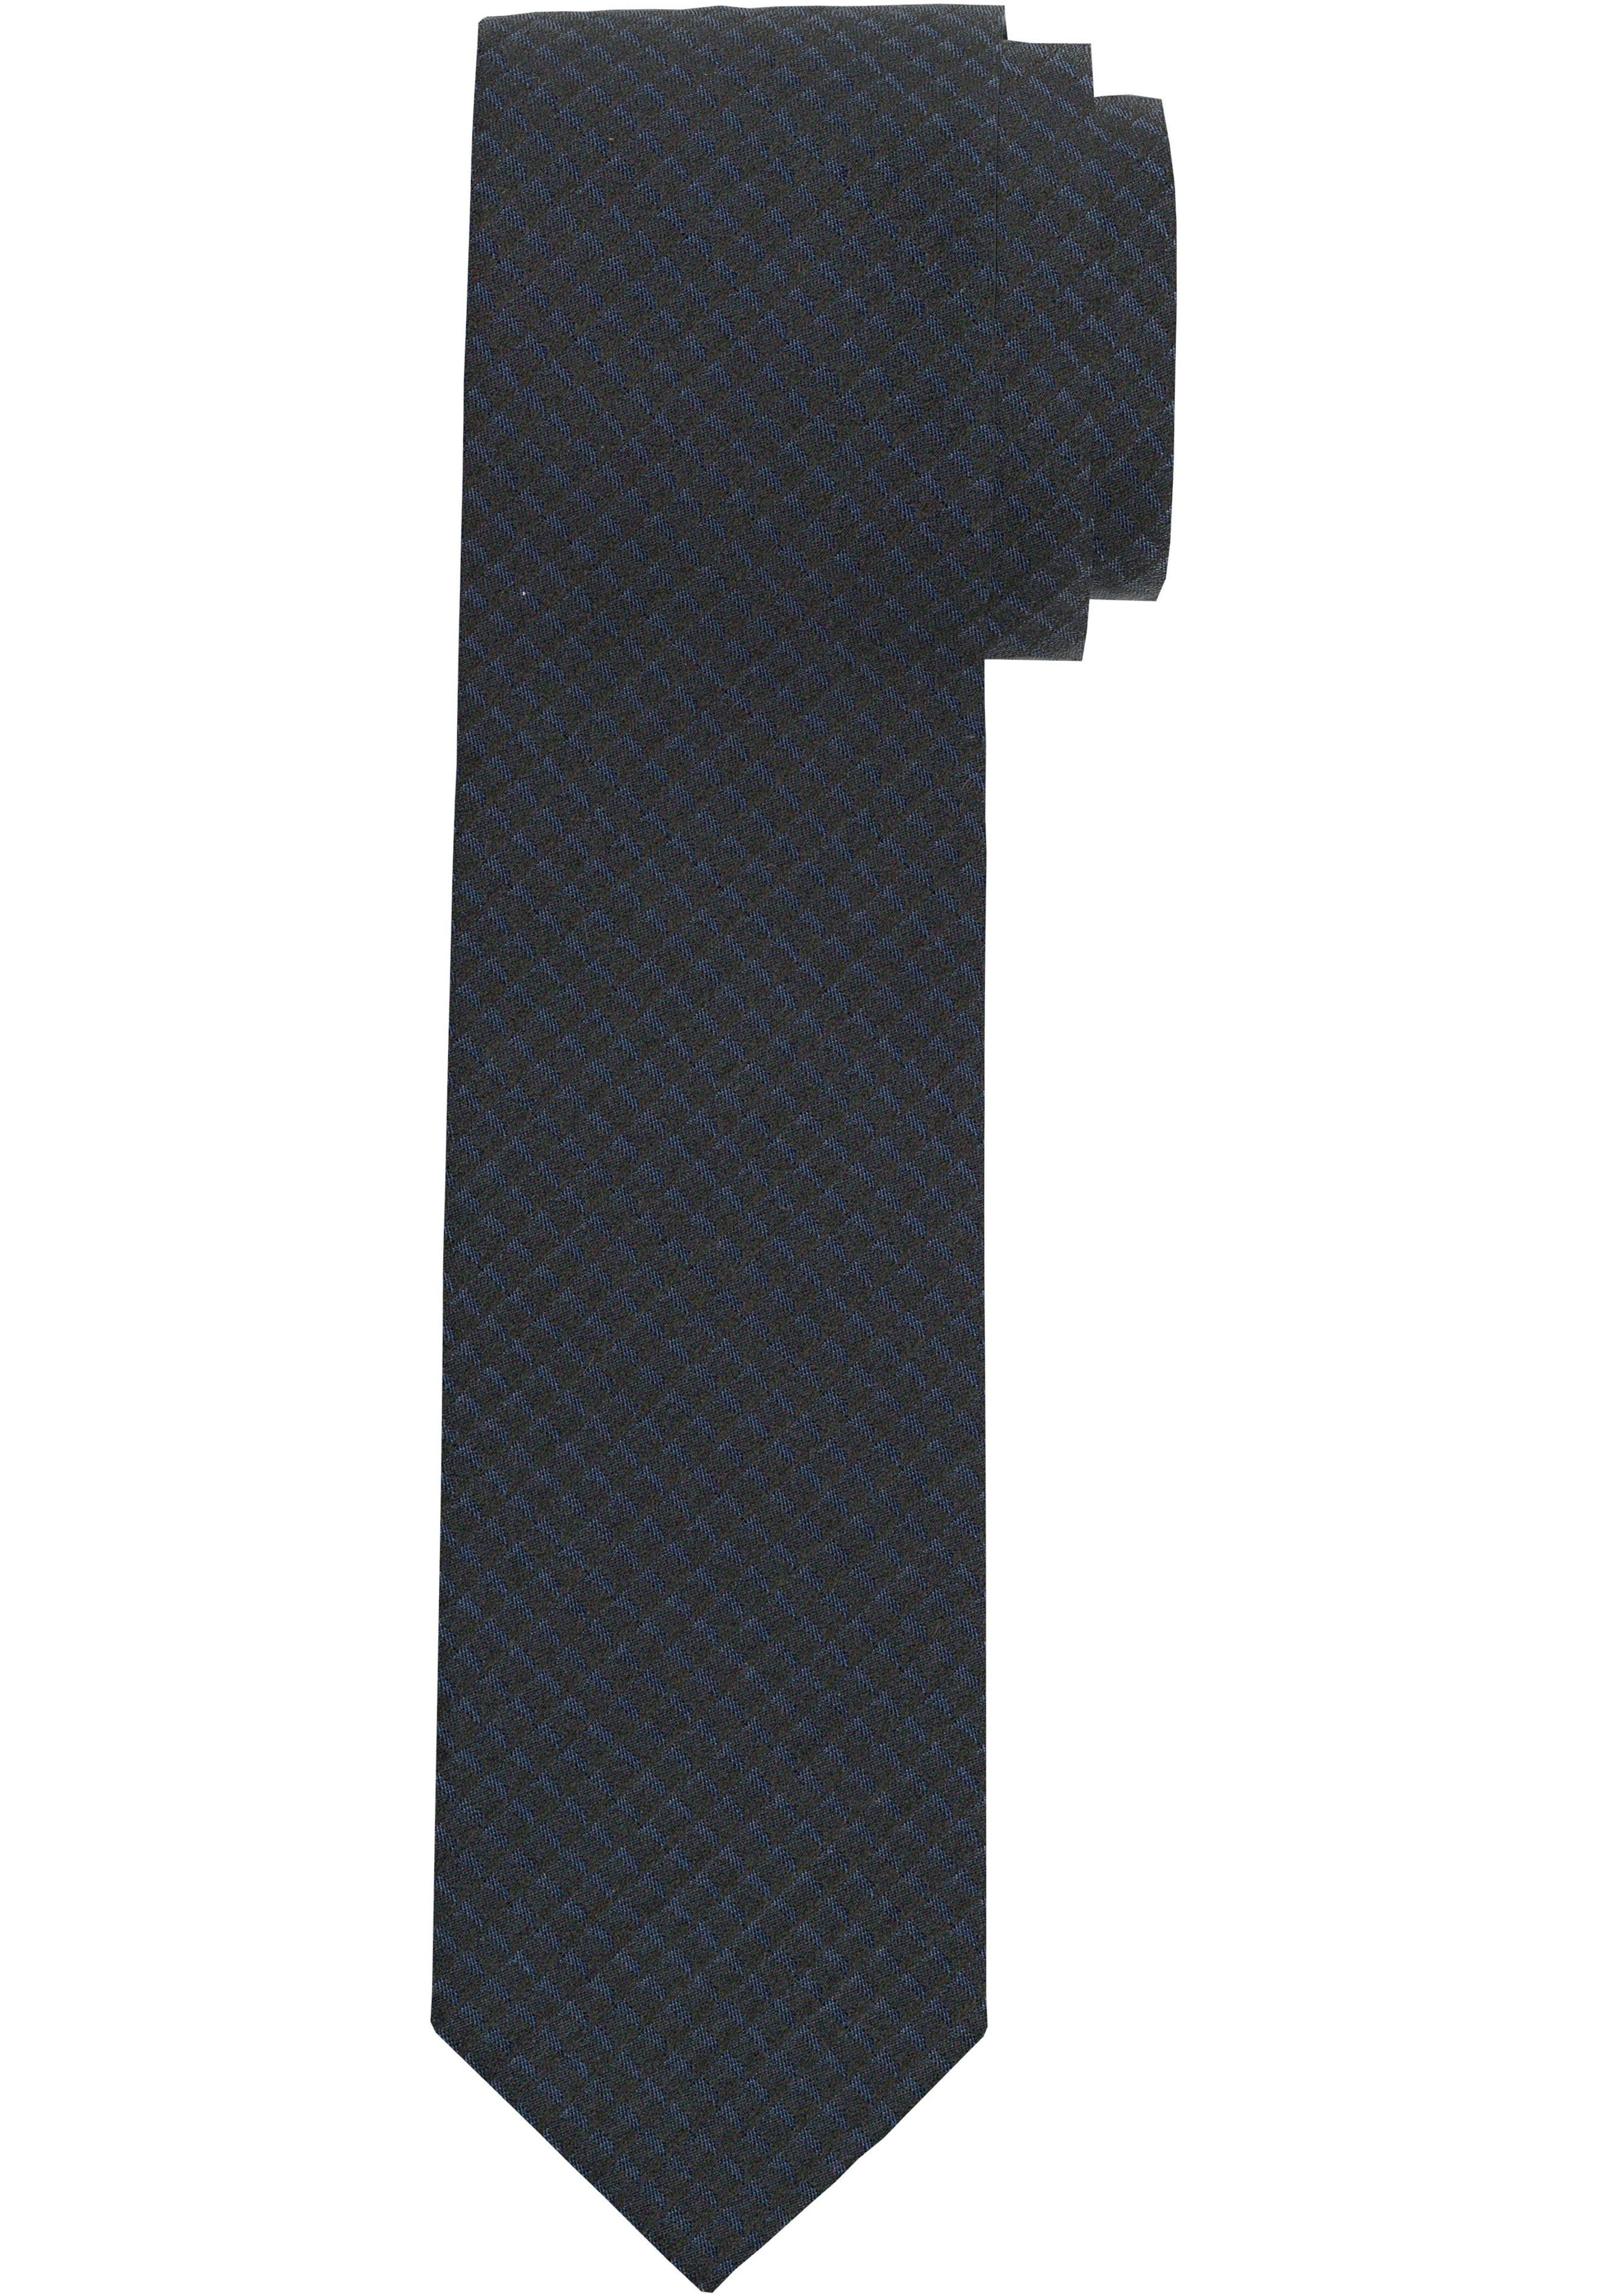 OLYMP Krawatte Krawatte mit Strukturmuster marine